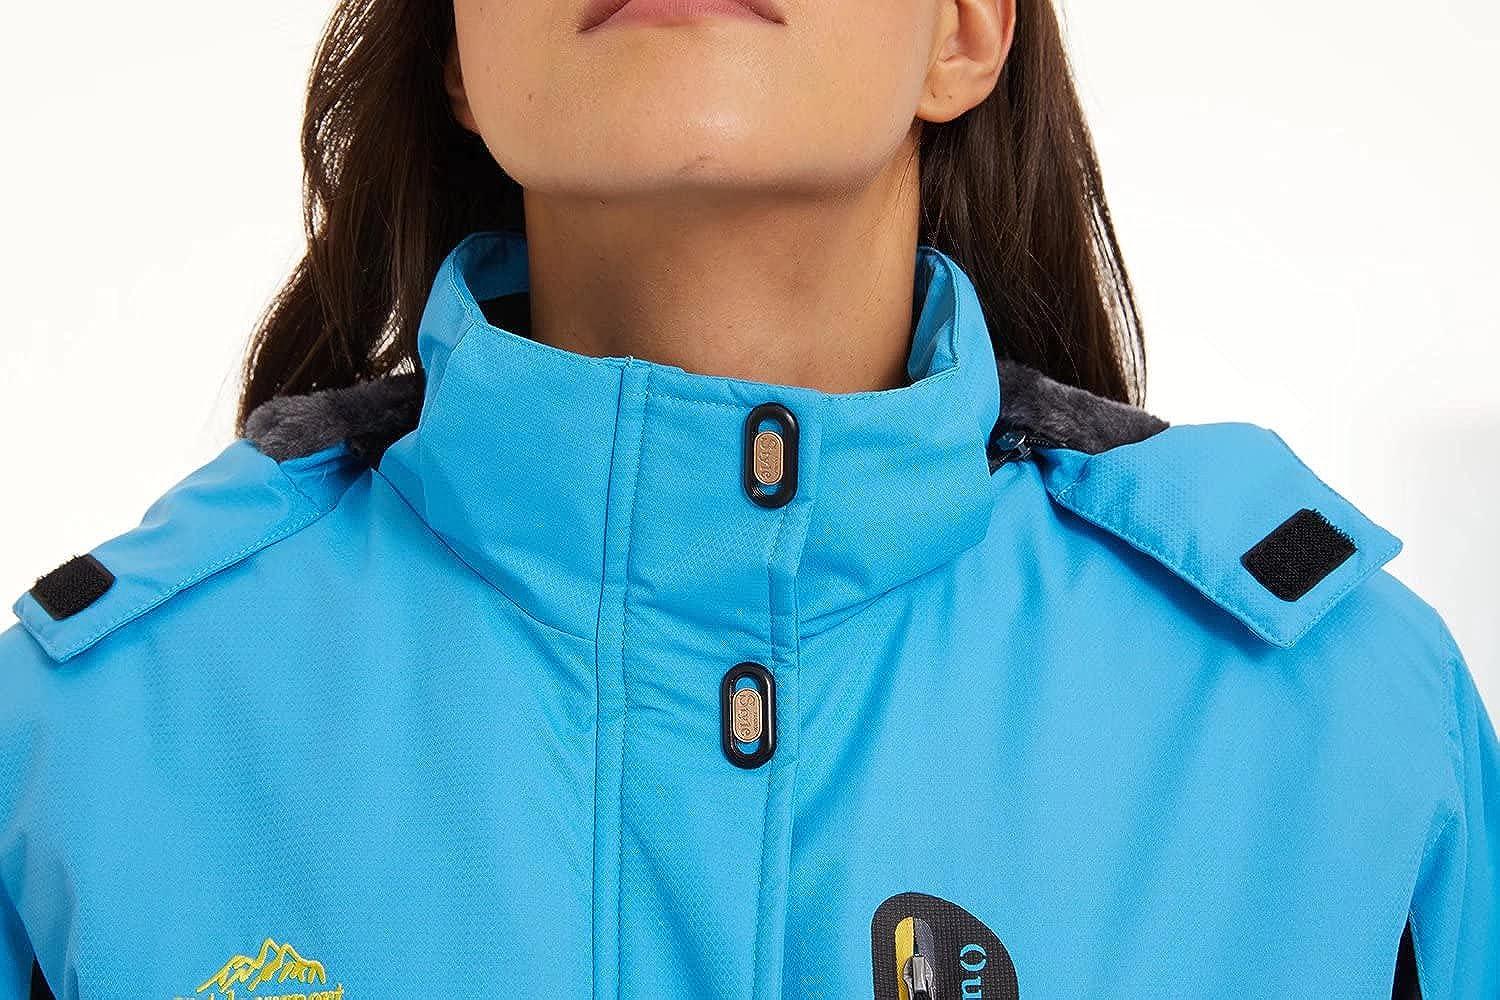 MAGCOMSEN Women's Winter Coats Water Resistant Snow Ski Jacket Fleece Lined  with Hood Windproof Rain Jackets Parka Black Gy XX-Large